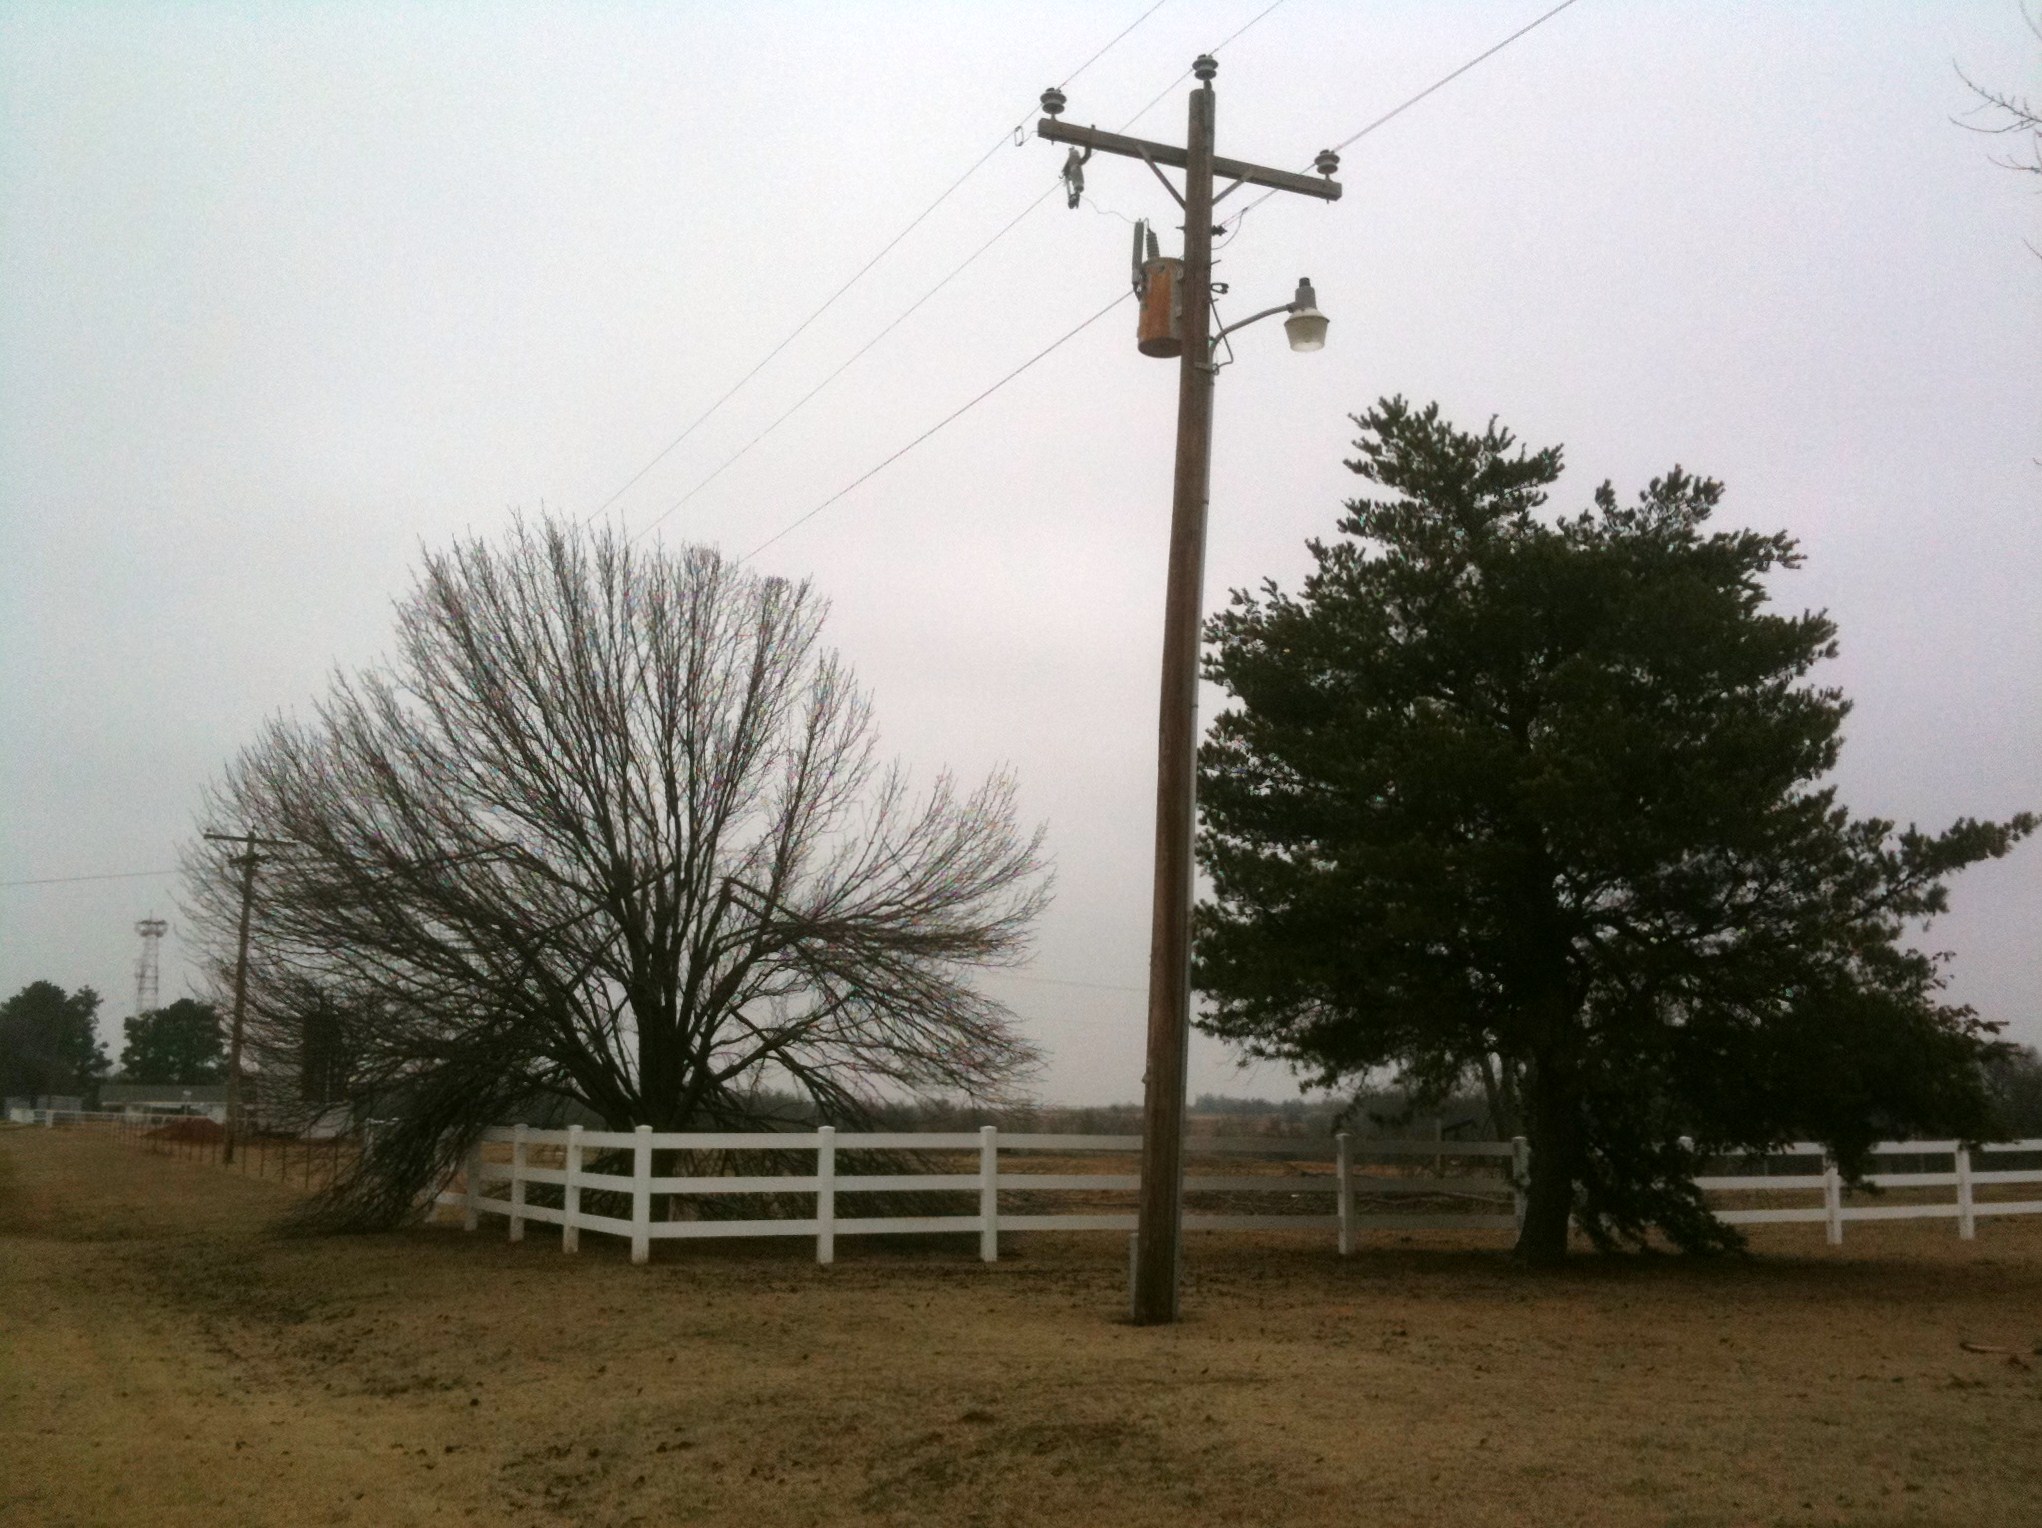 a utility pole and telephone box near a field